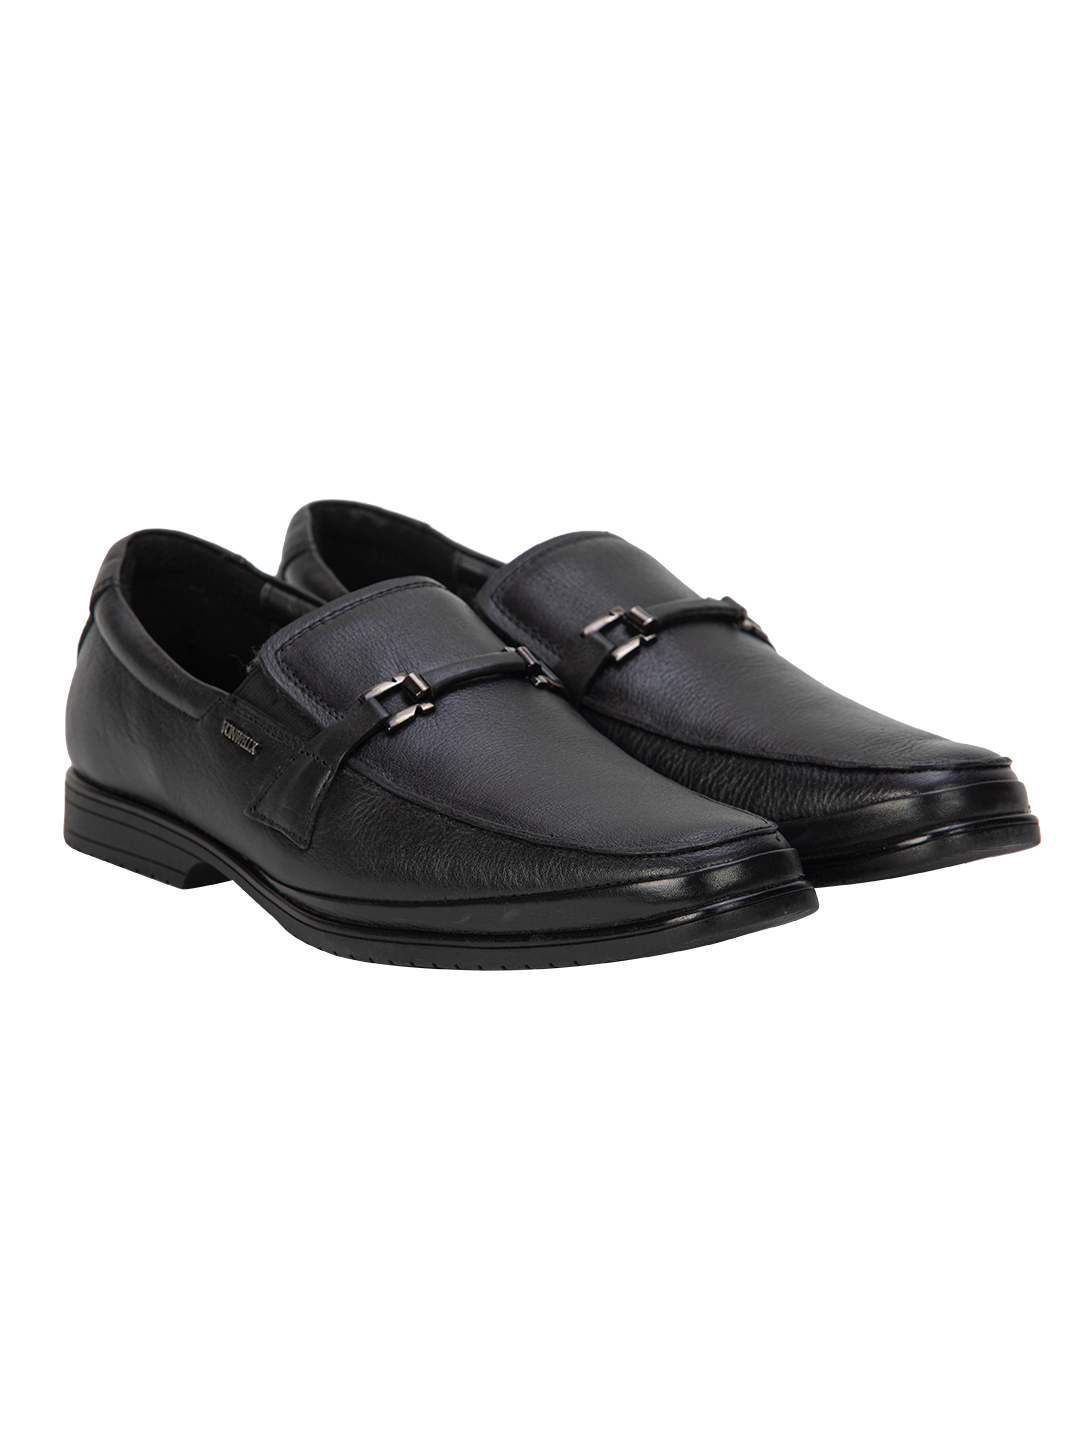 Buy Von Wellx Germany Comfort Black Jace Shoes Online in Sharjah